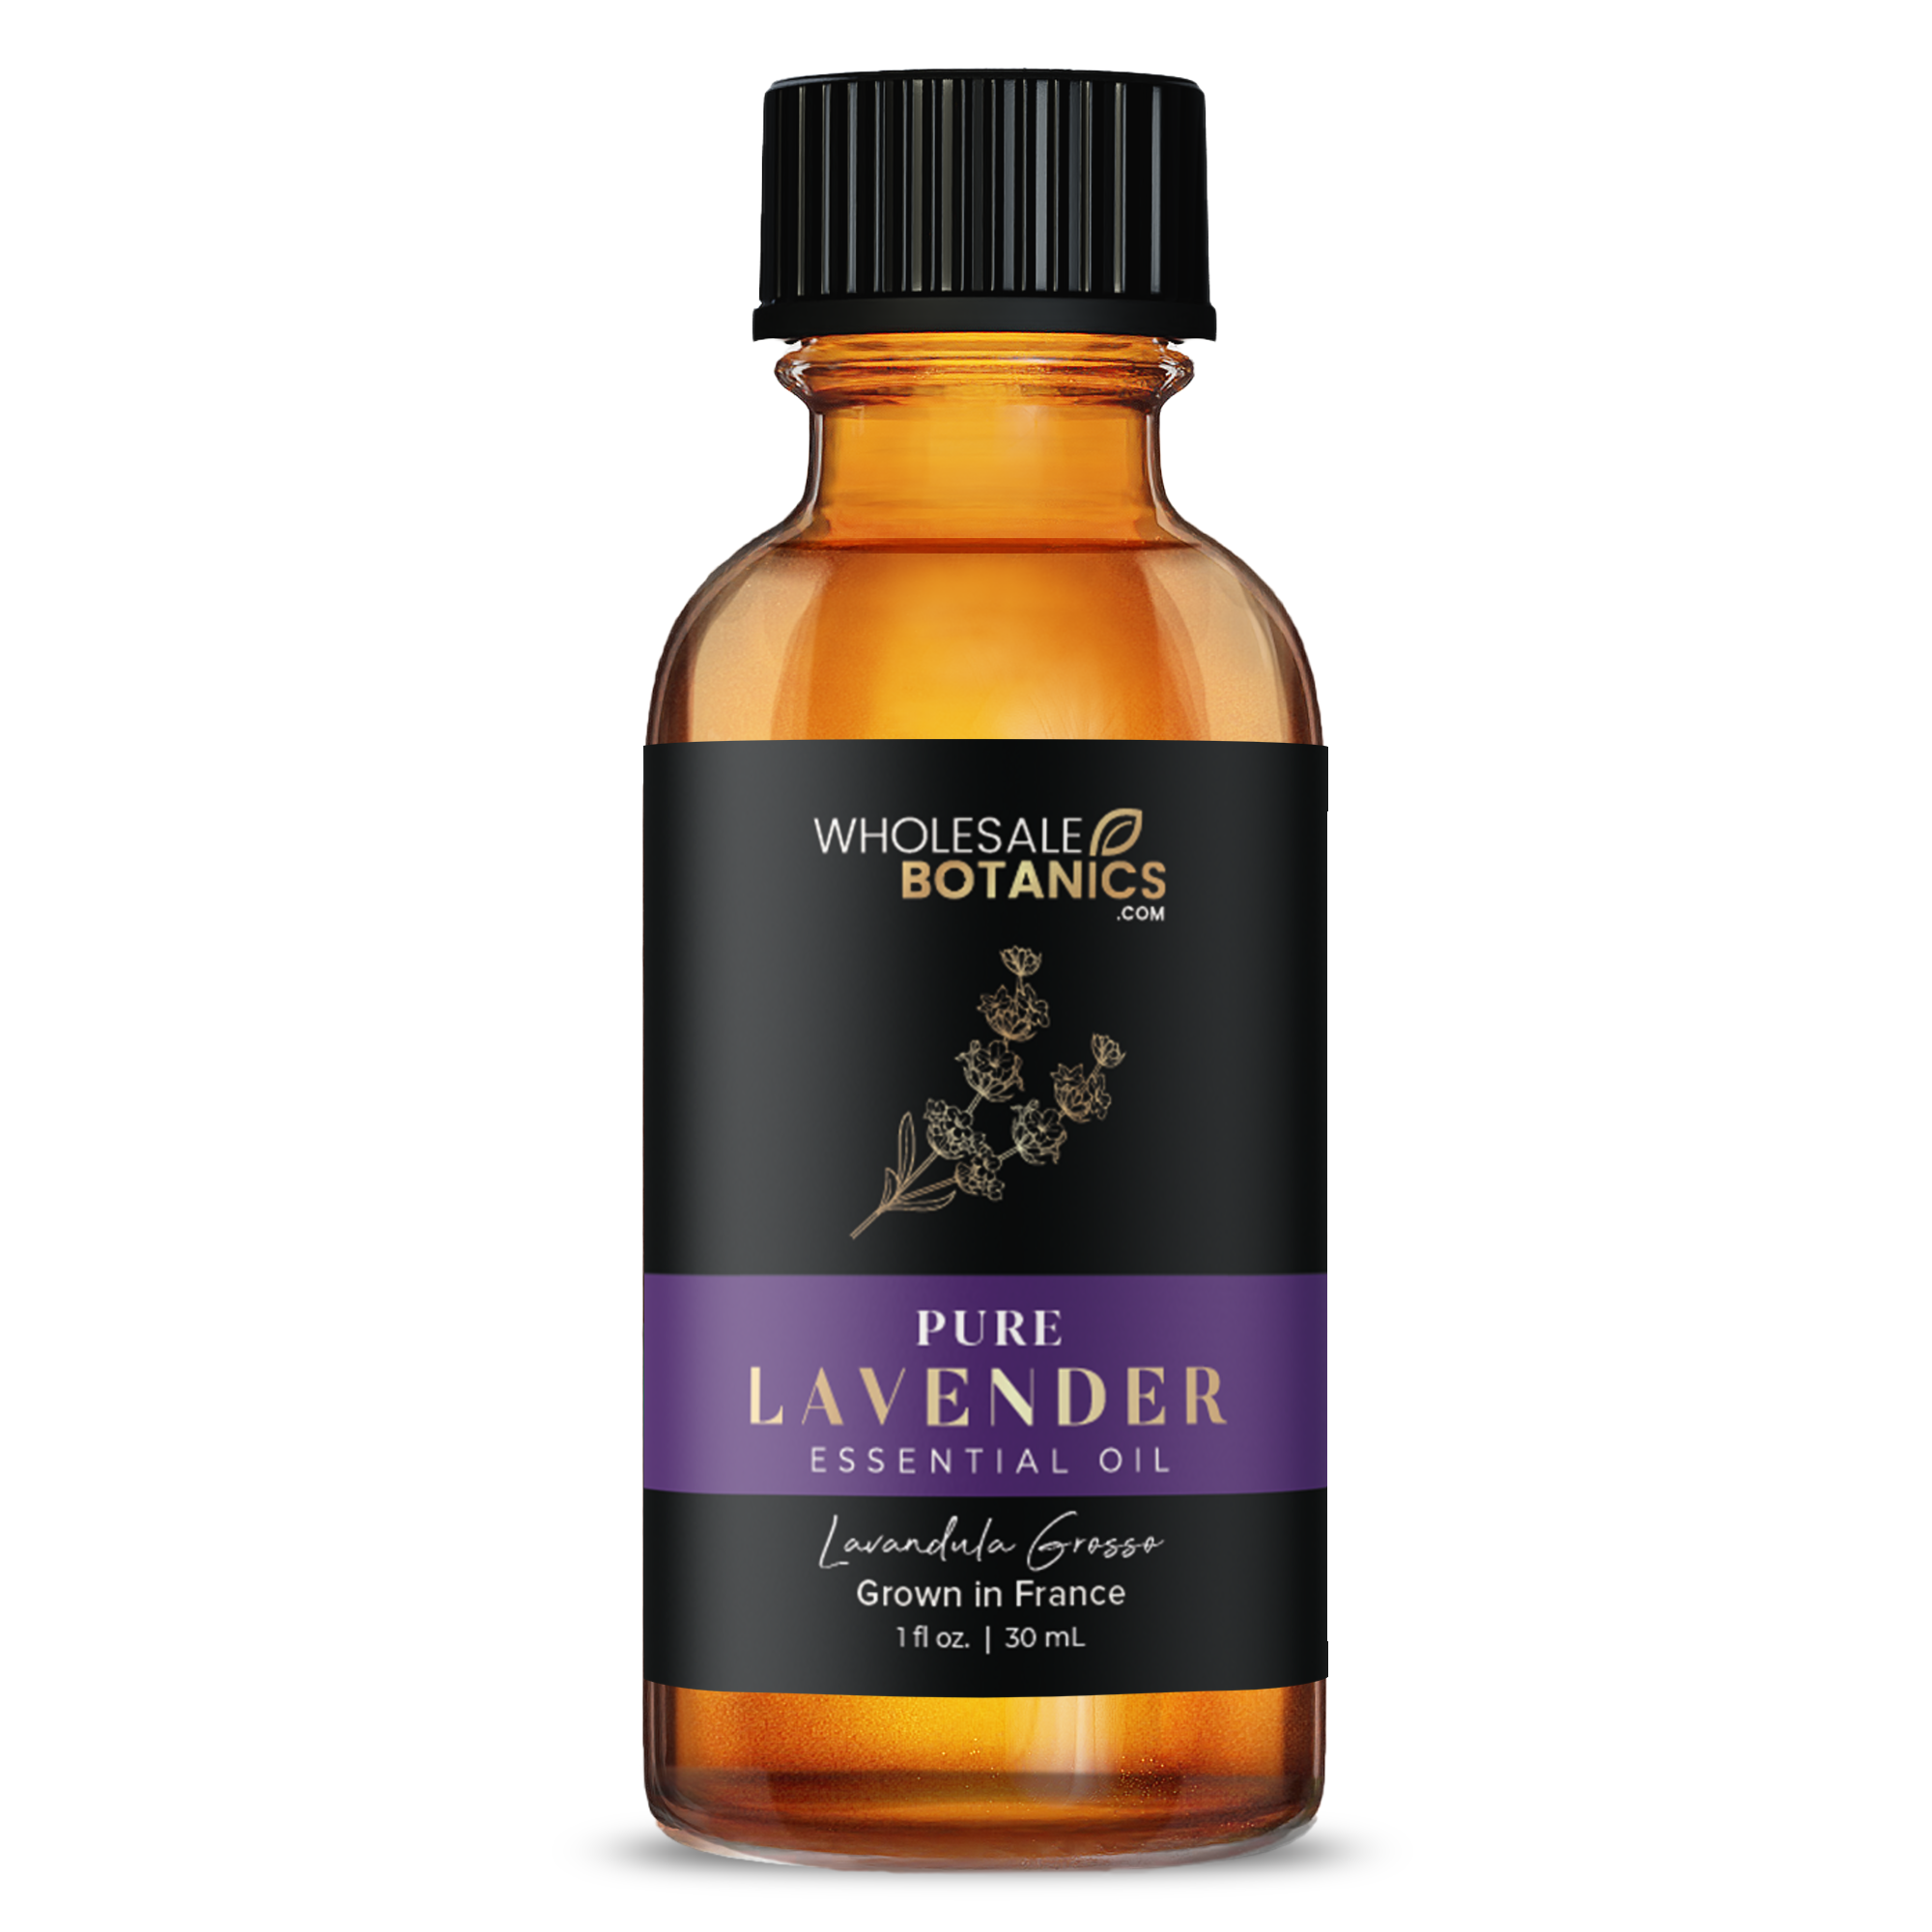 Purity Lavender Essential Oil - Lavandin Grosso - France - 1 oz